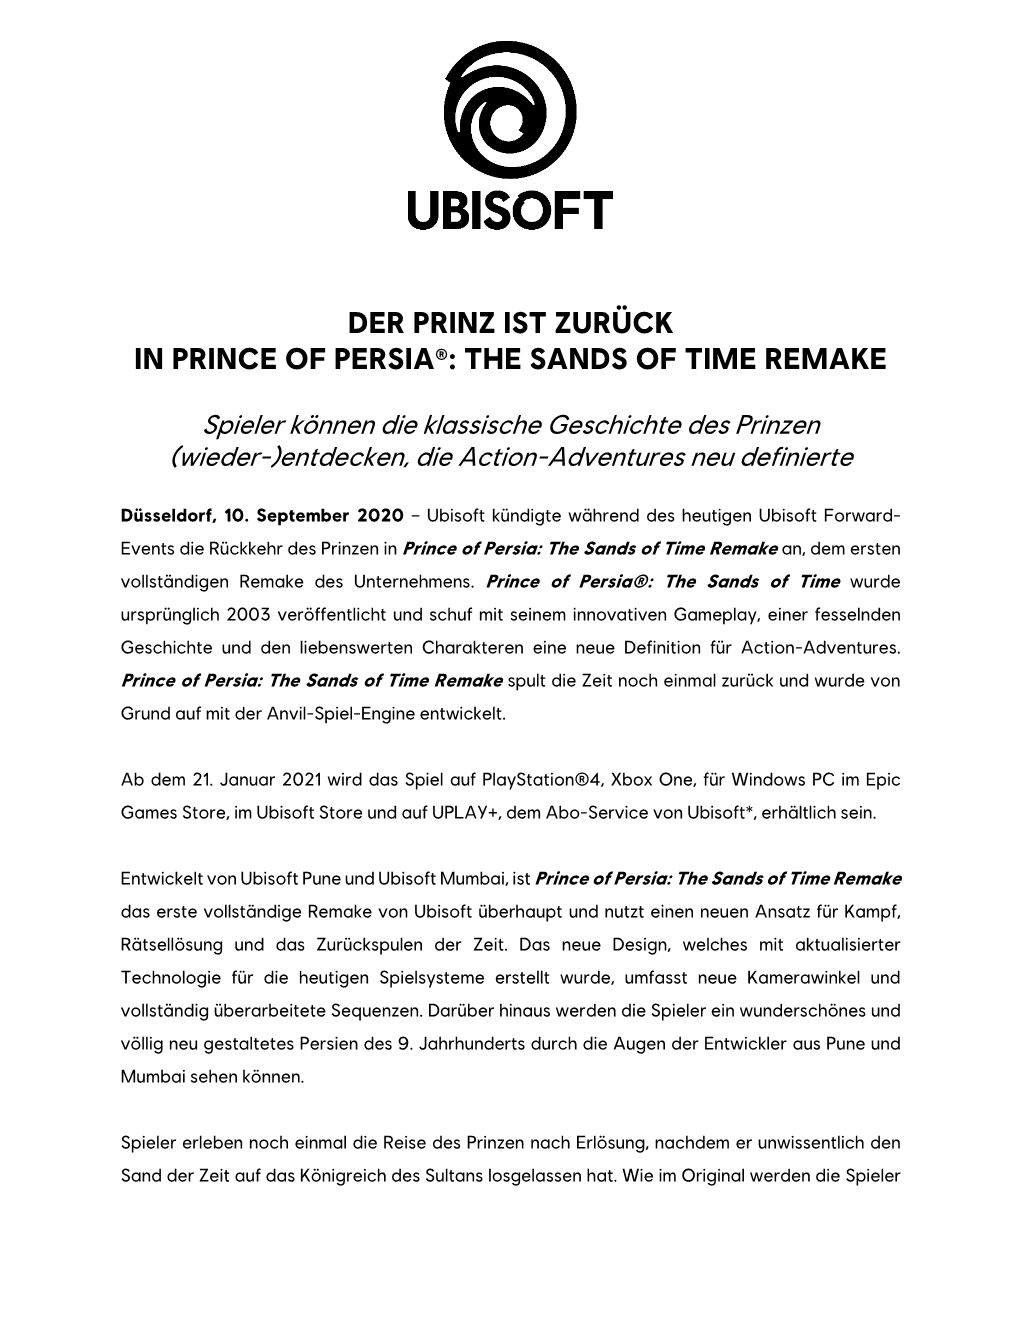 Der Prinz Ist Zurück in Prince of Persia®: the Sands of Time Remake